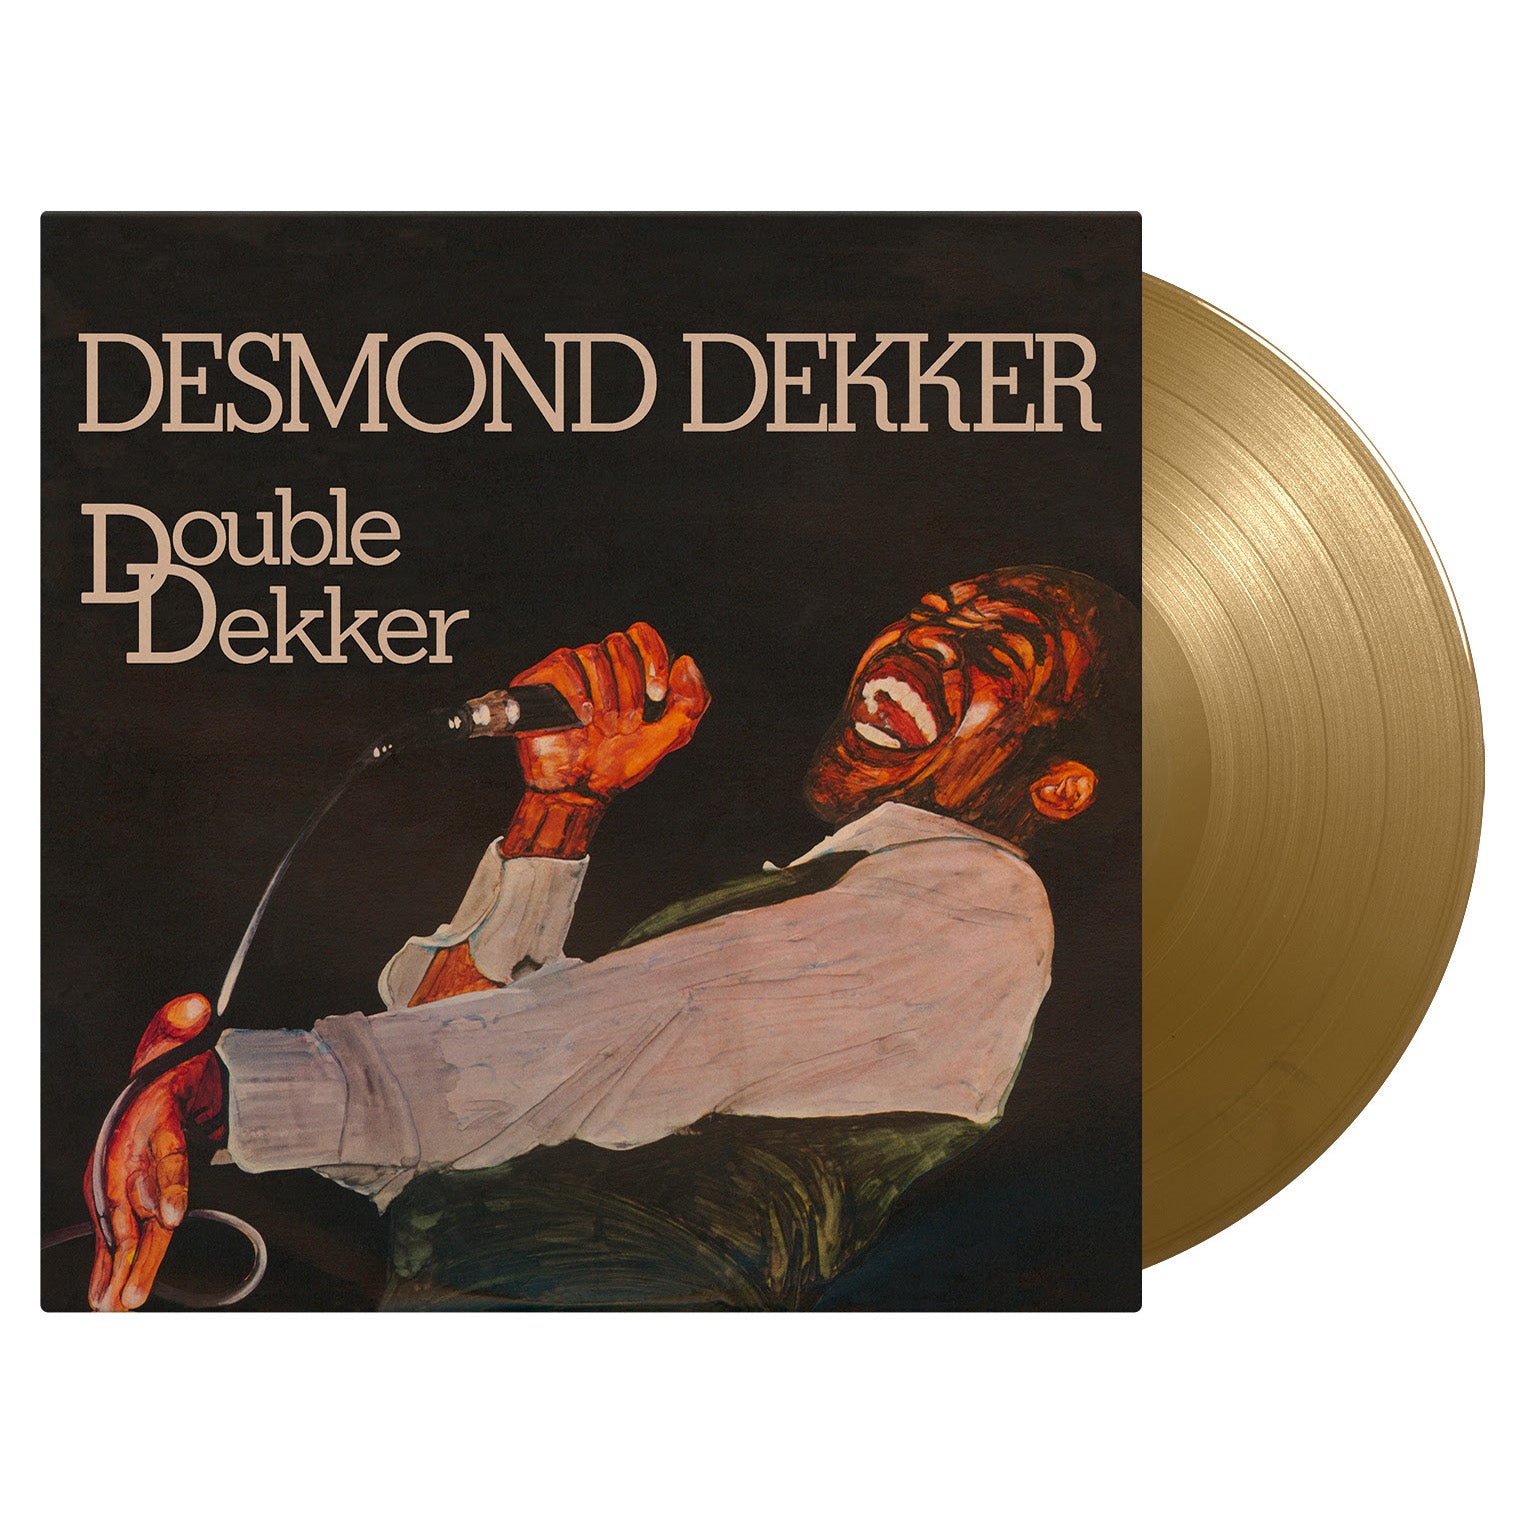 DESMOND DEKKER - Double Dekker - 2LP - Gold Vinyl [FEB 9]